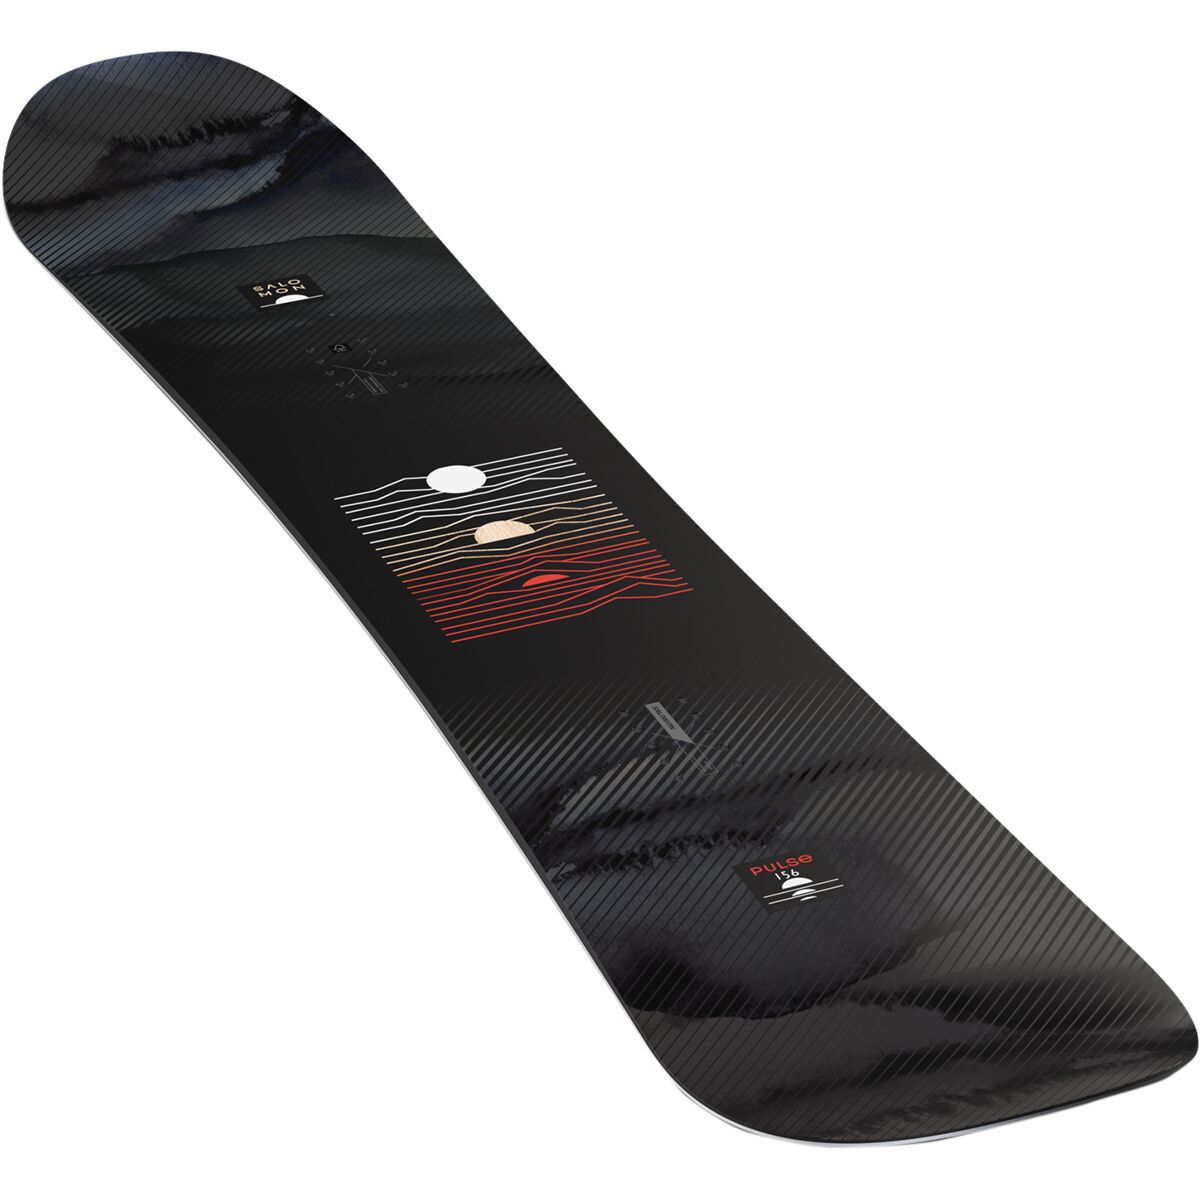 Salomon Snowboard - 2023 - Snowboard